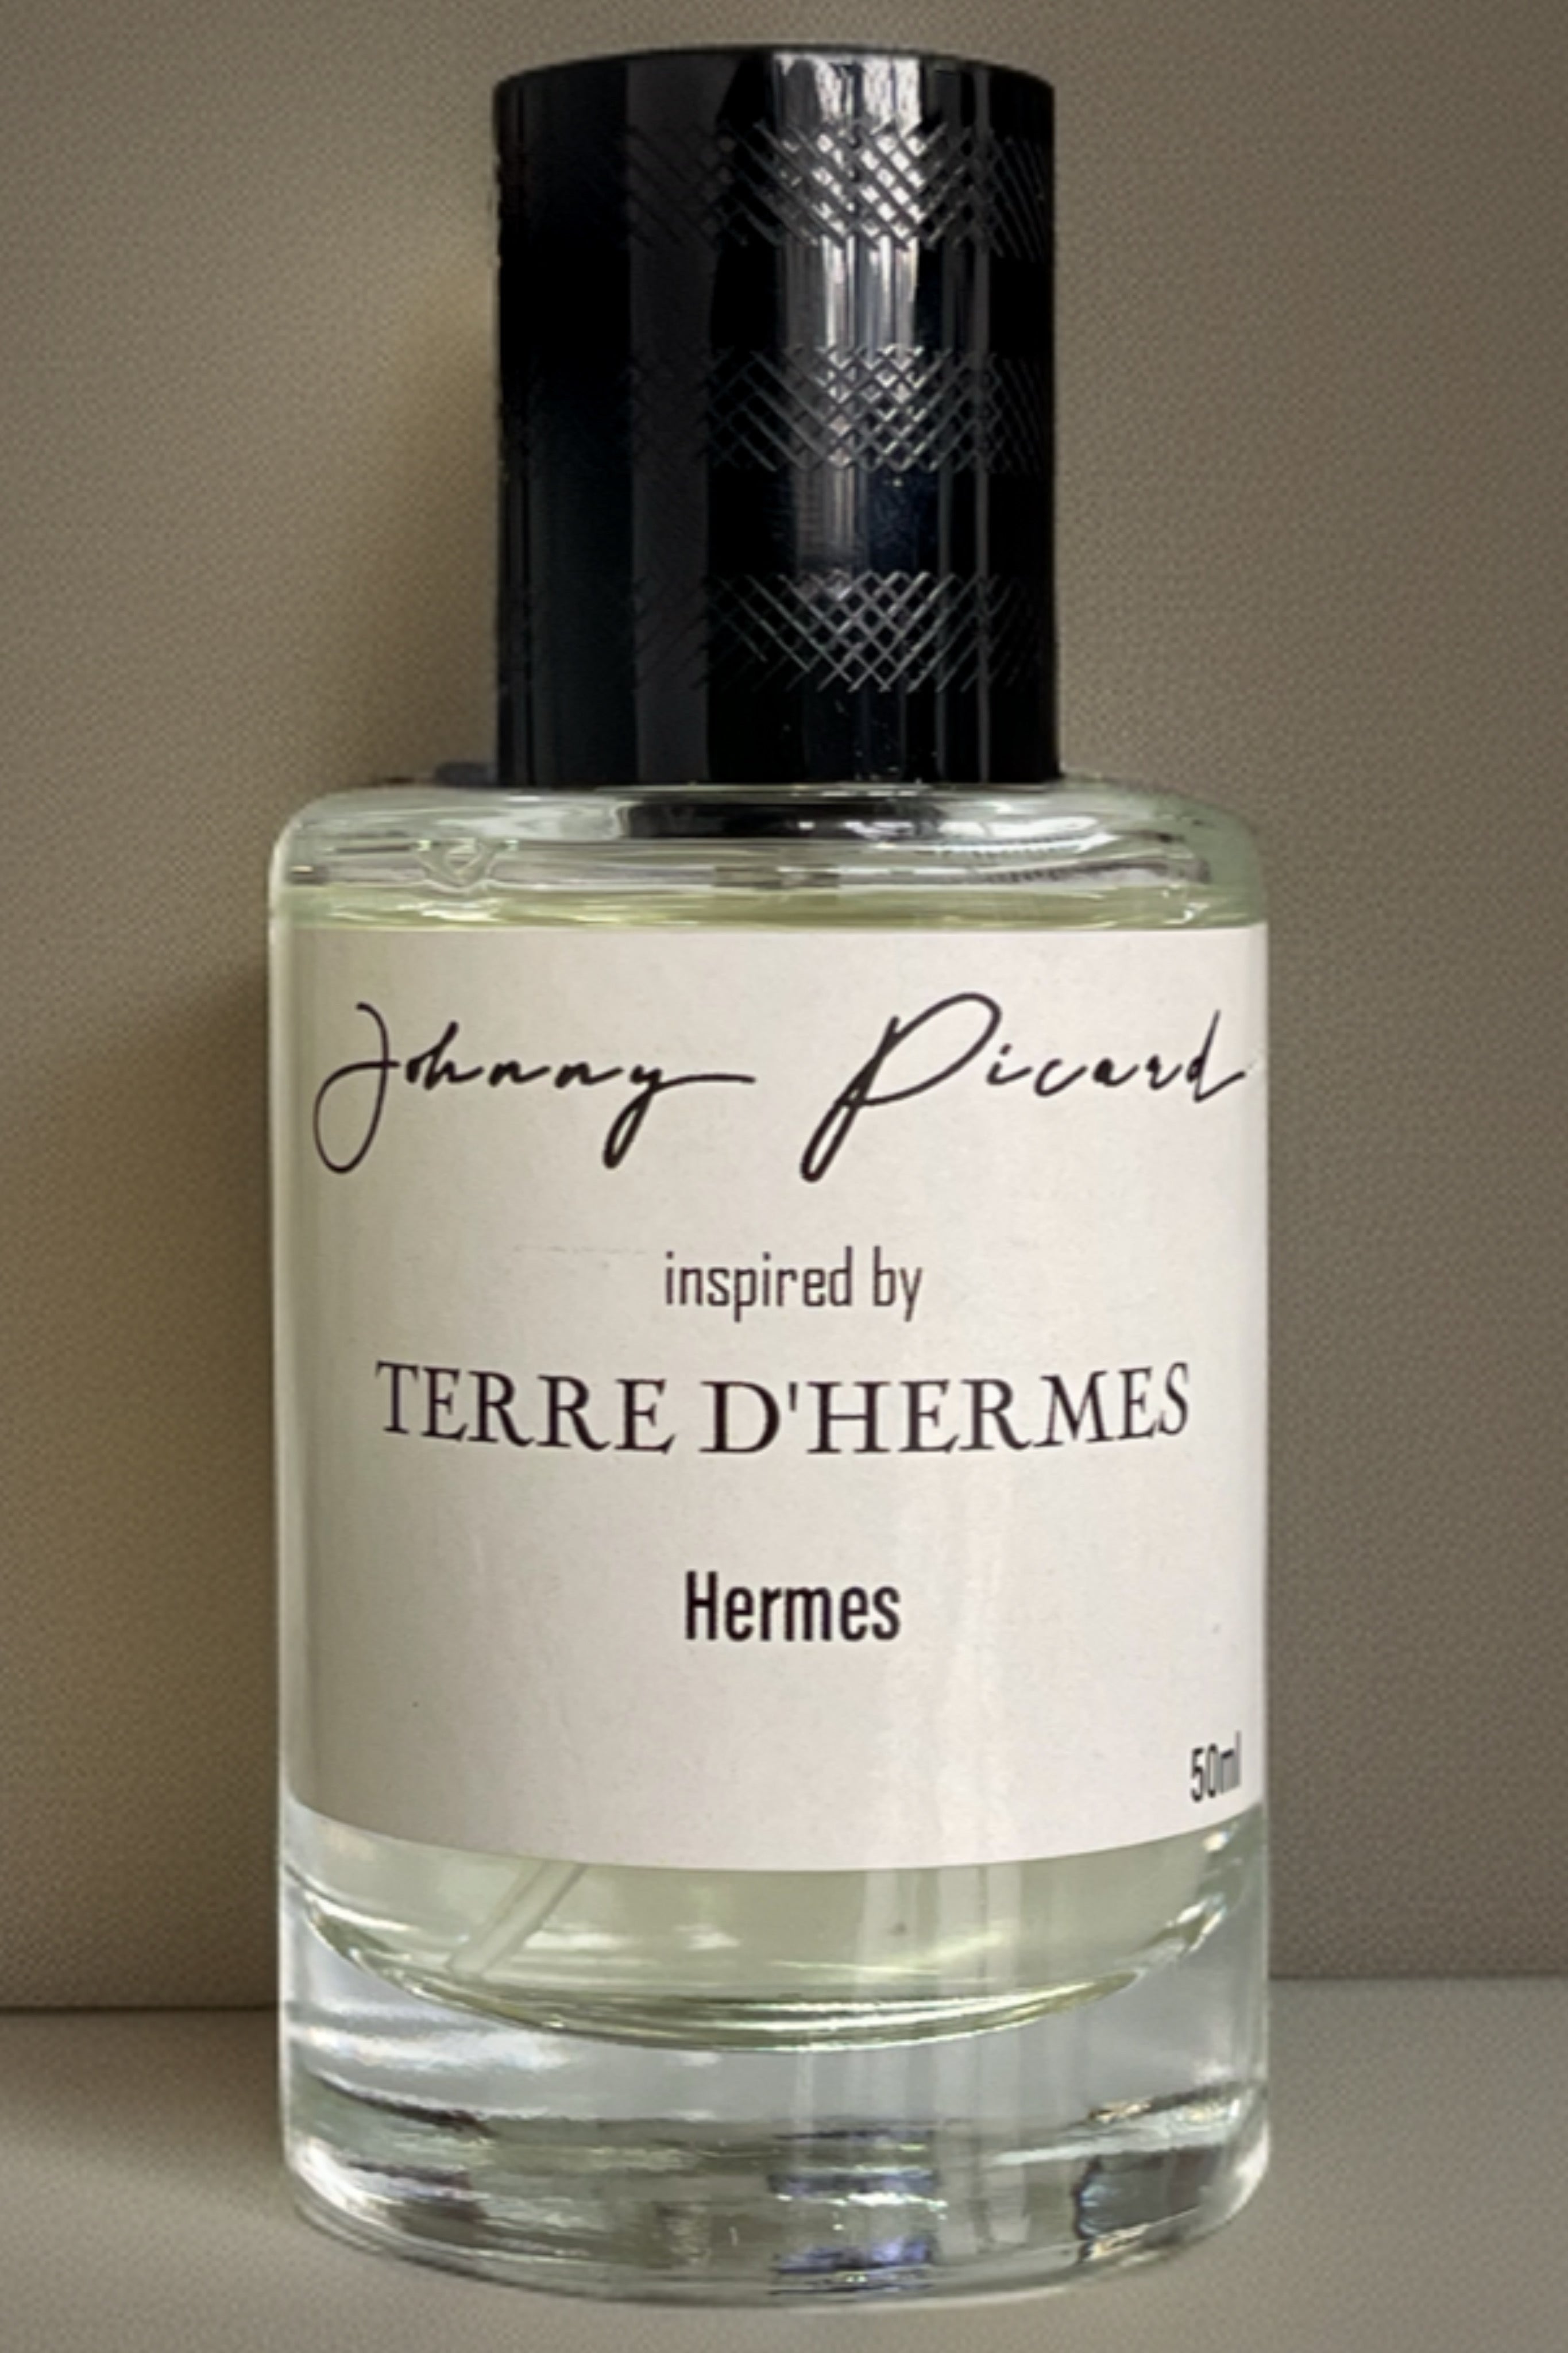 Johnny picard inspired by Terre D'hermes  HERMES